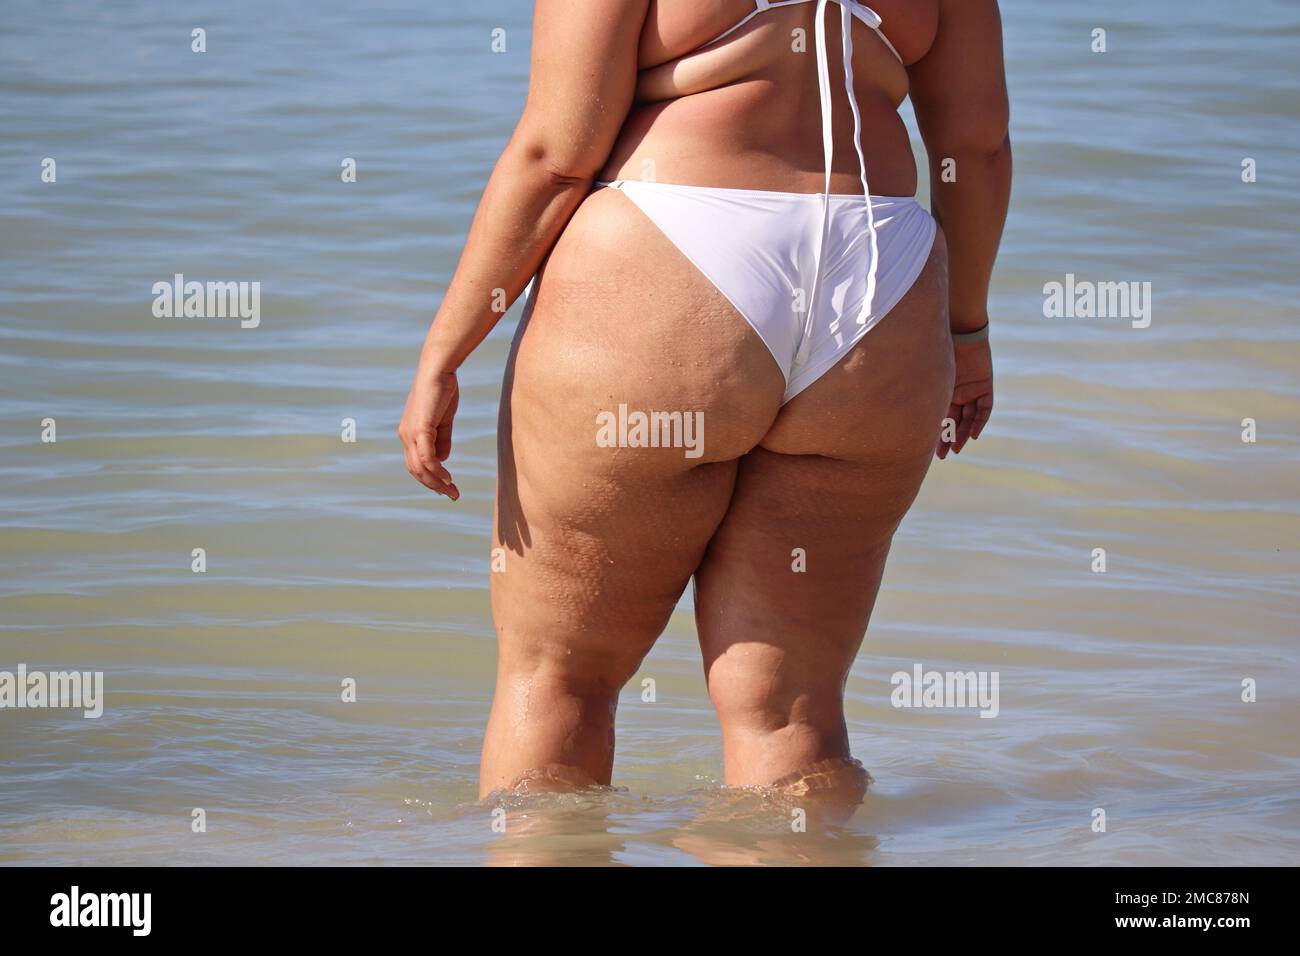 Fat woman bikini hi-res stock photography and images - Alamy